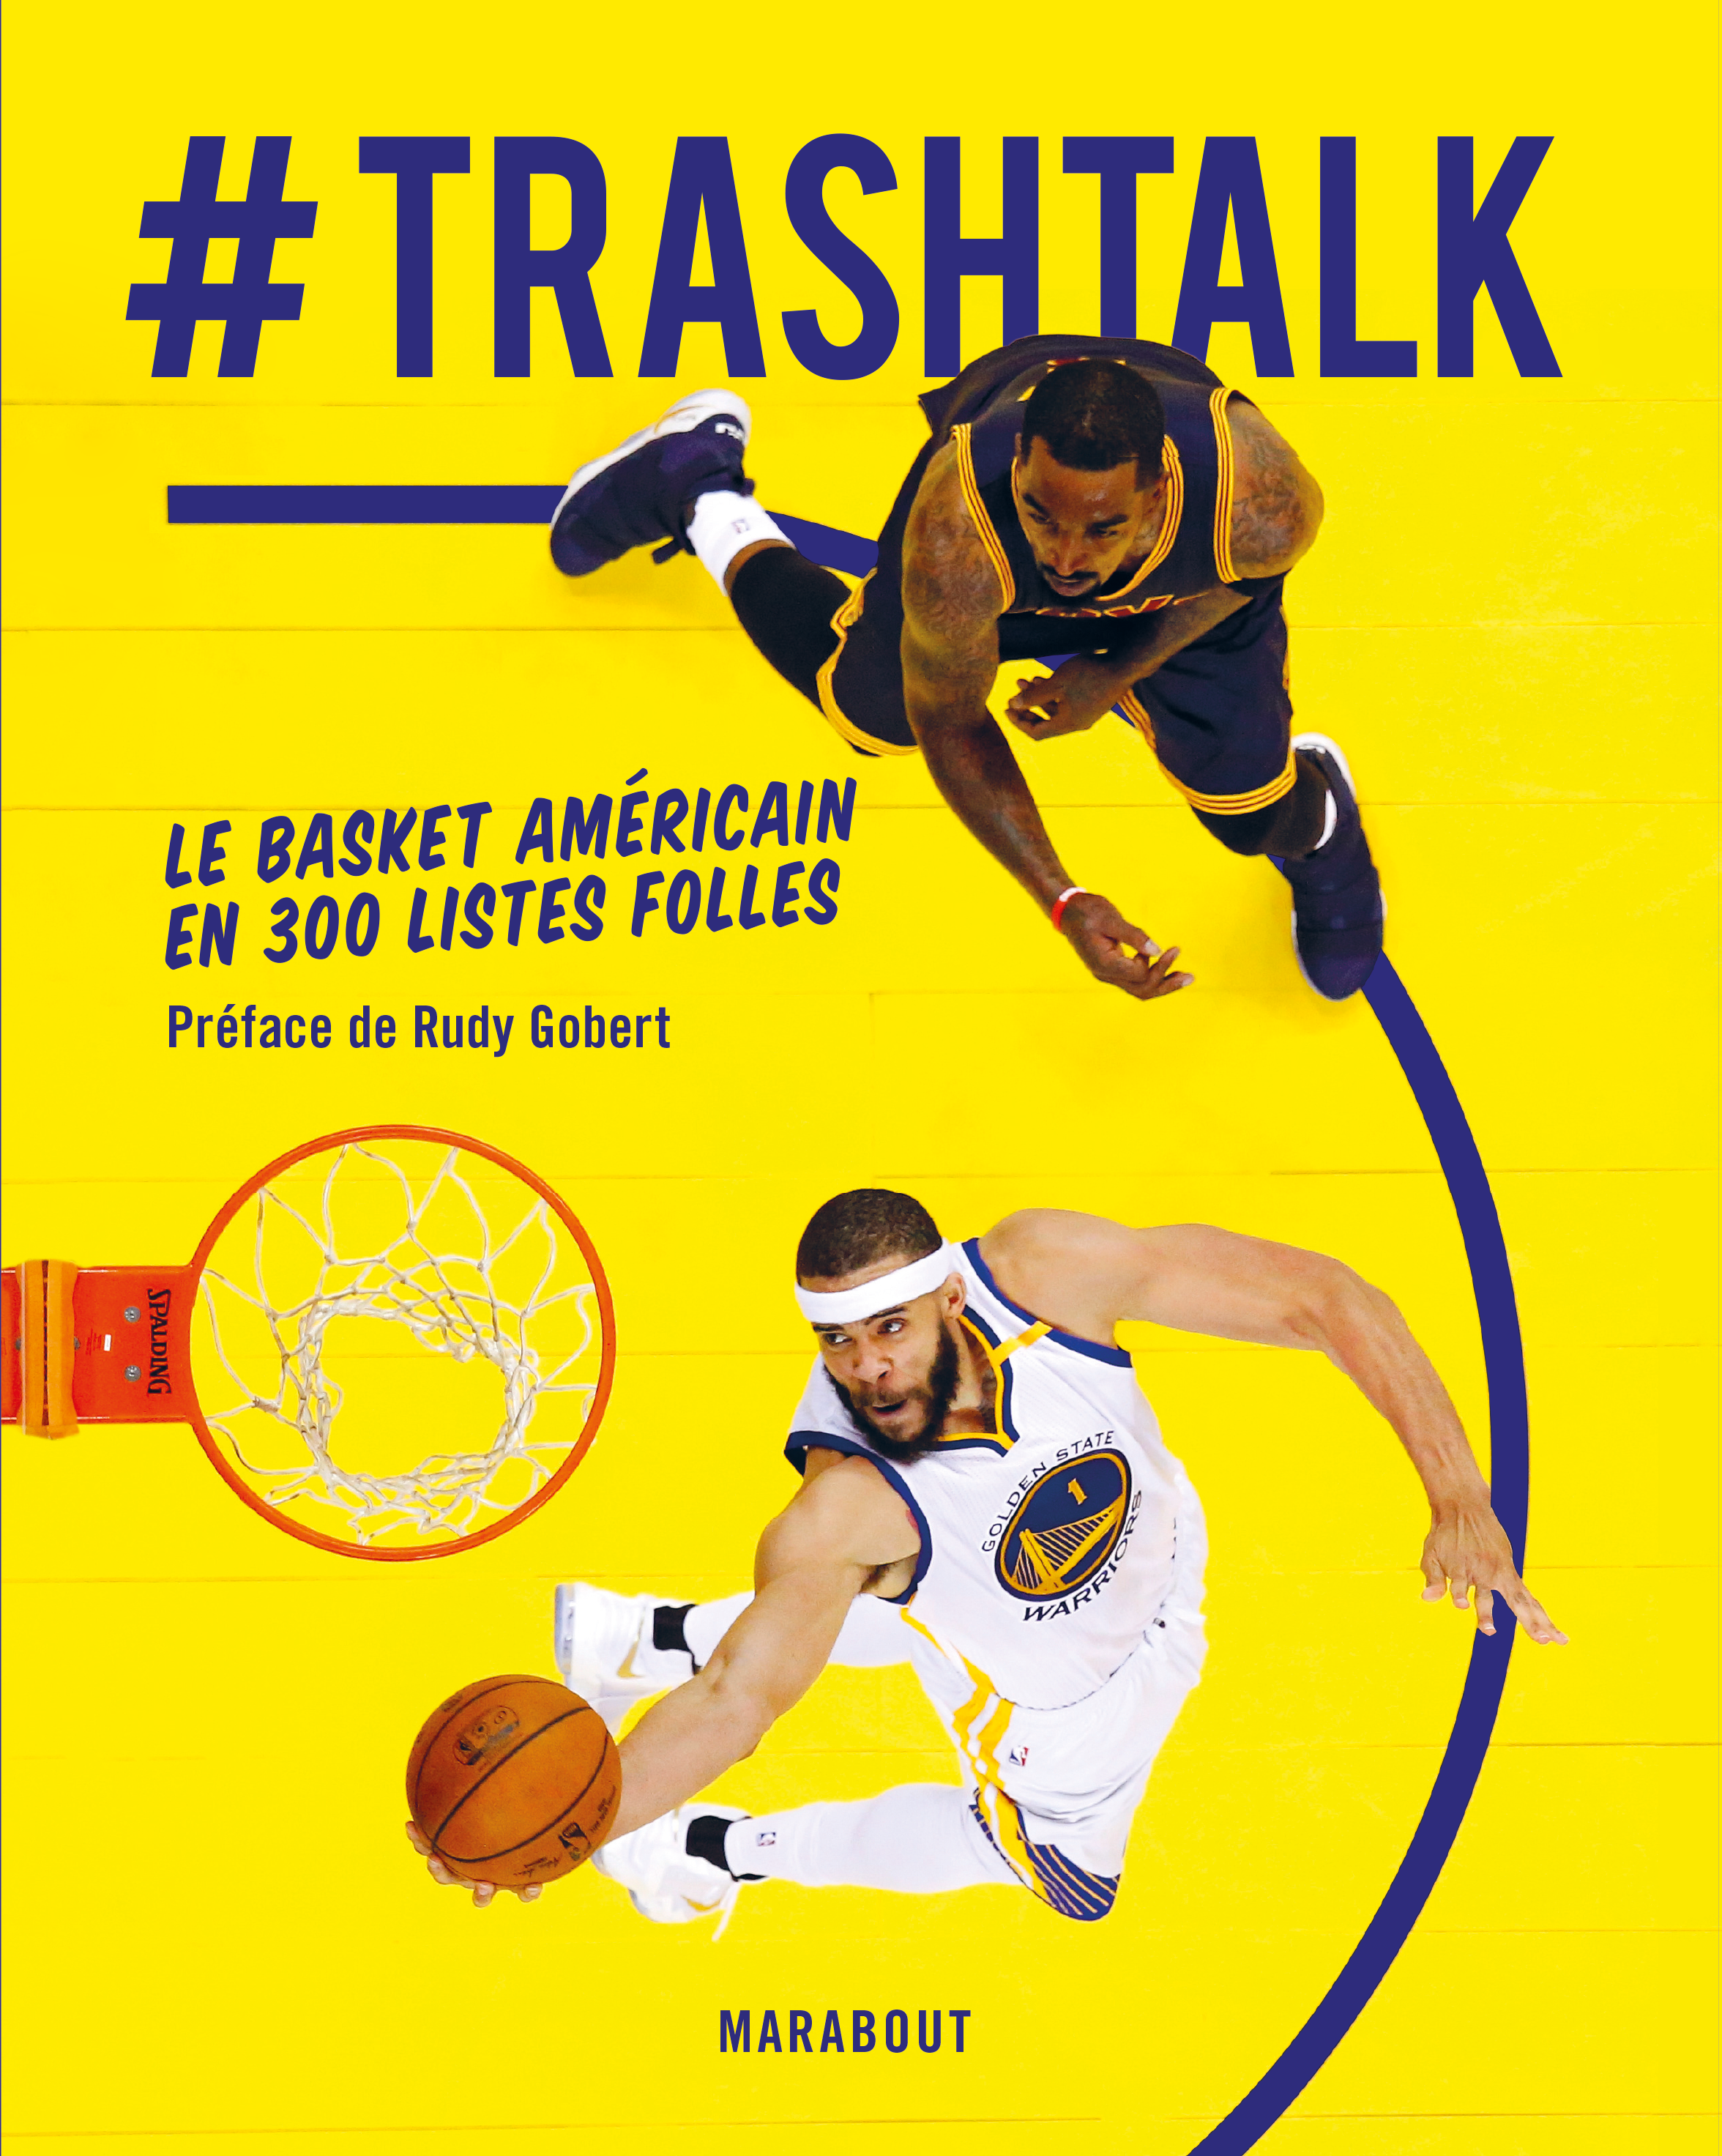 "TrashTalk", le basket américain en 300 listes folles